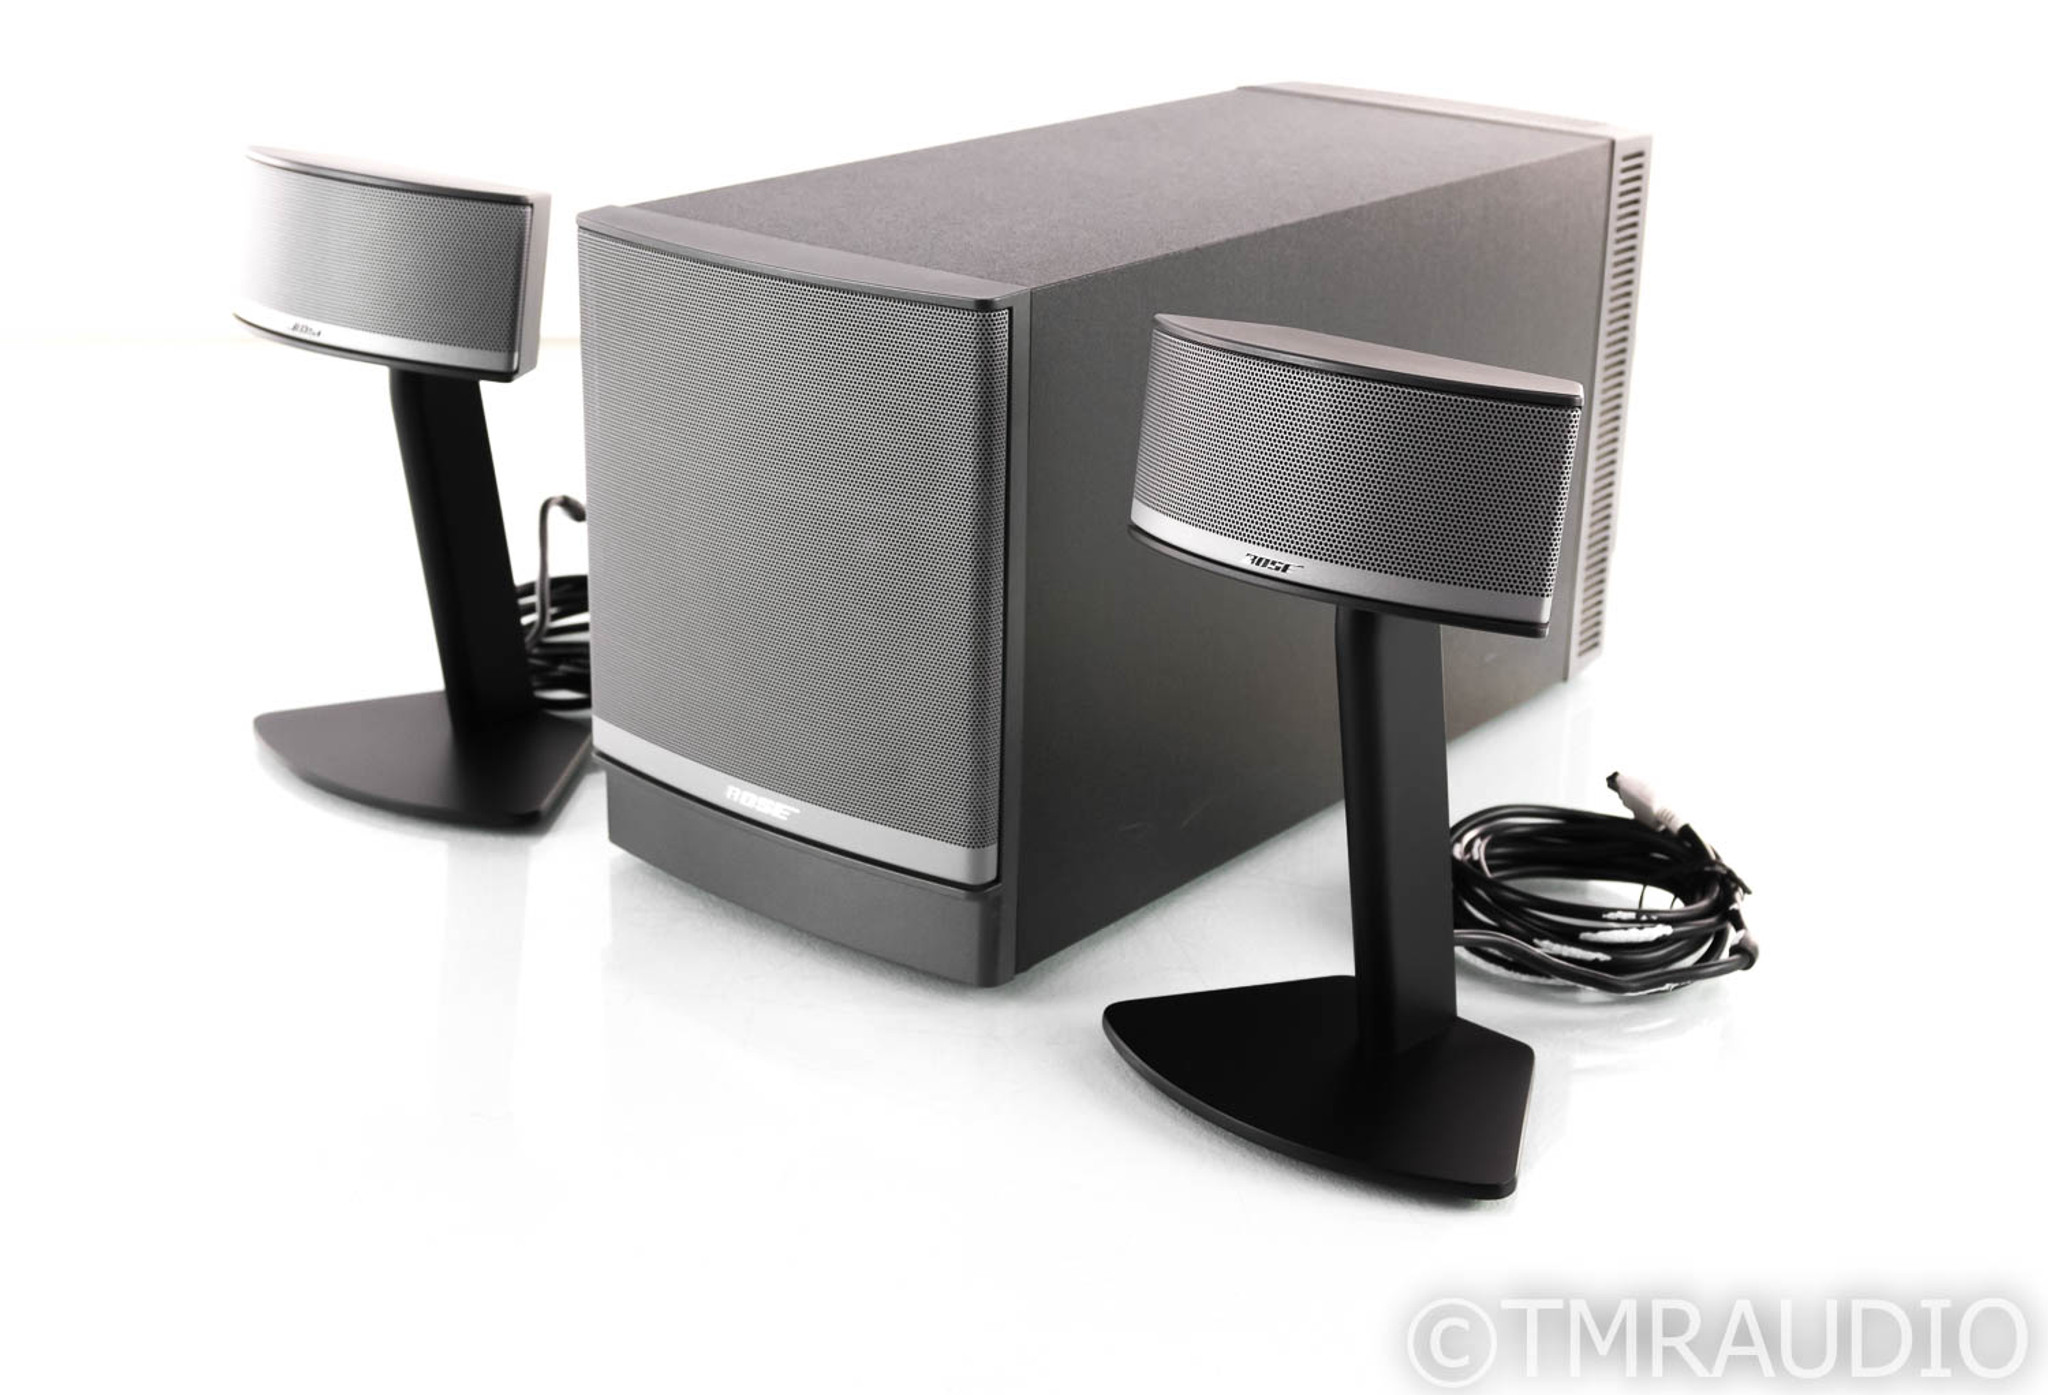 Bose Companion 5 2.1 Channel Desktop Speaker System; Black & Graphite